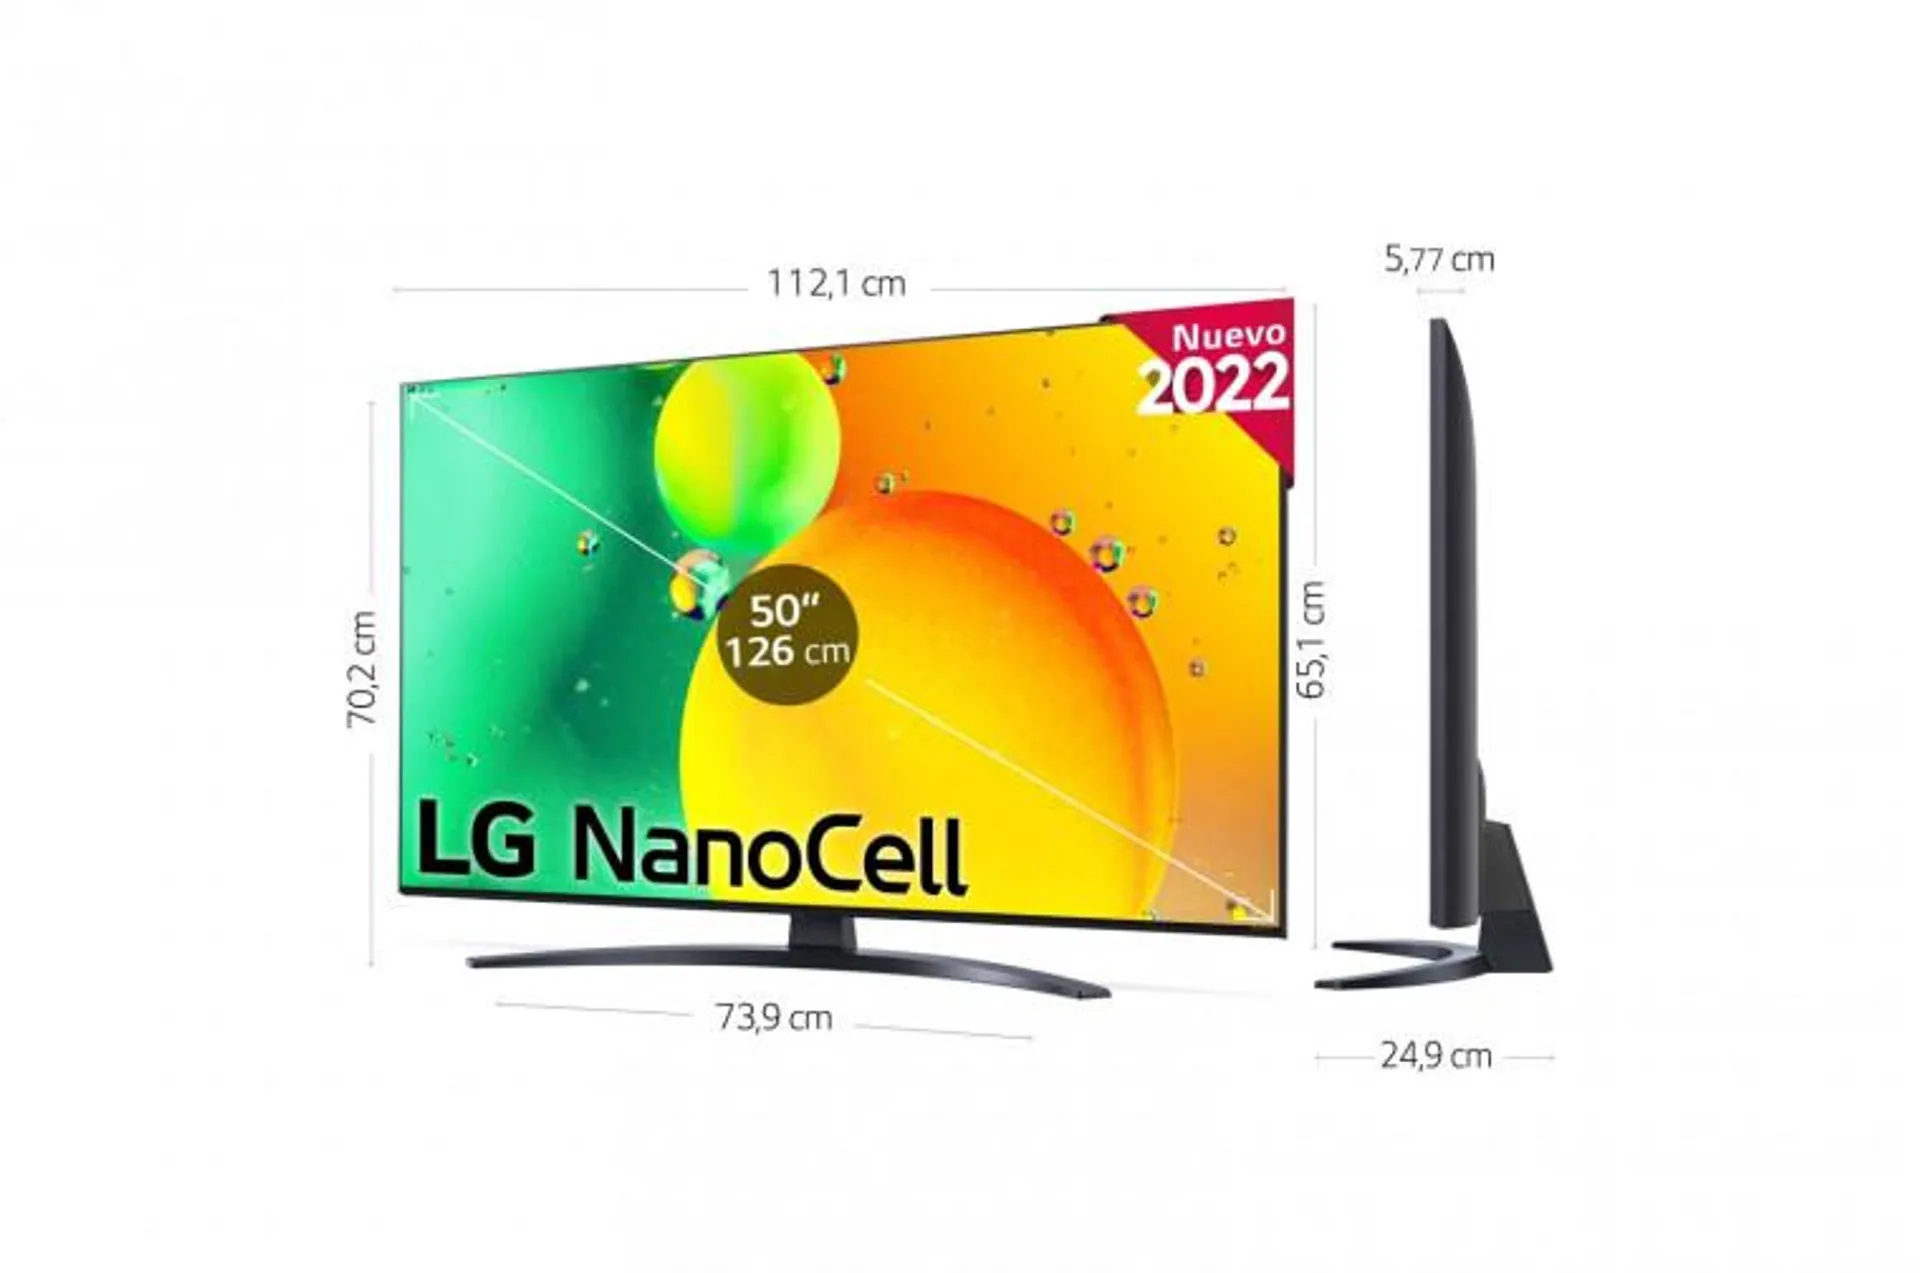 Outlet TV LG 4K NanoCell Smart TV 126cm (50")